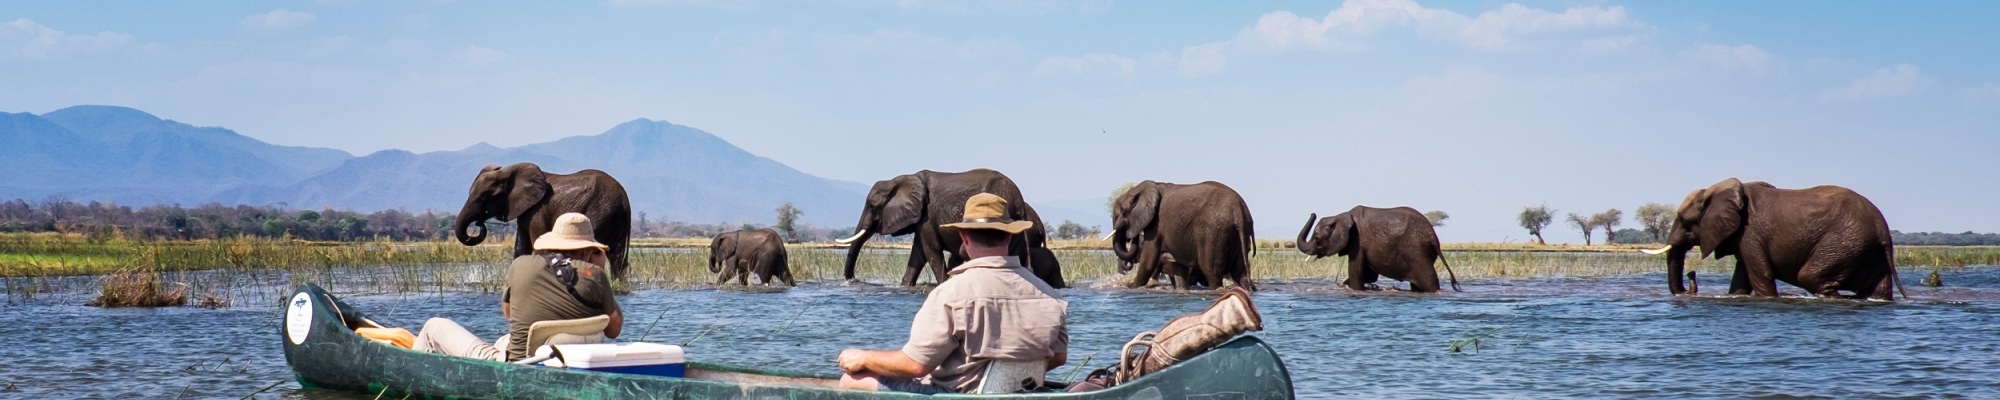 Safari famille Zimbabwe